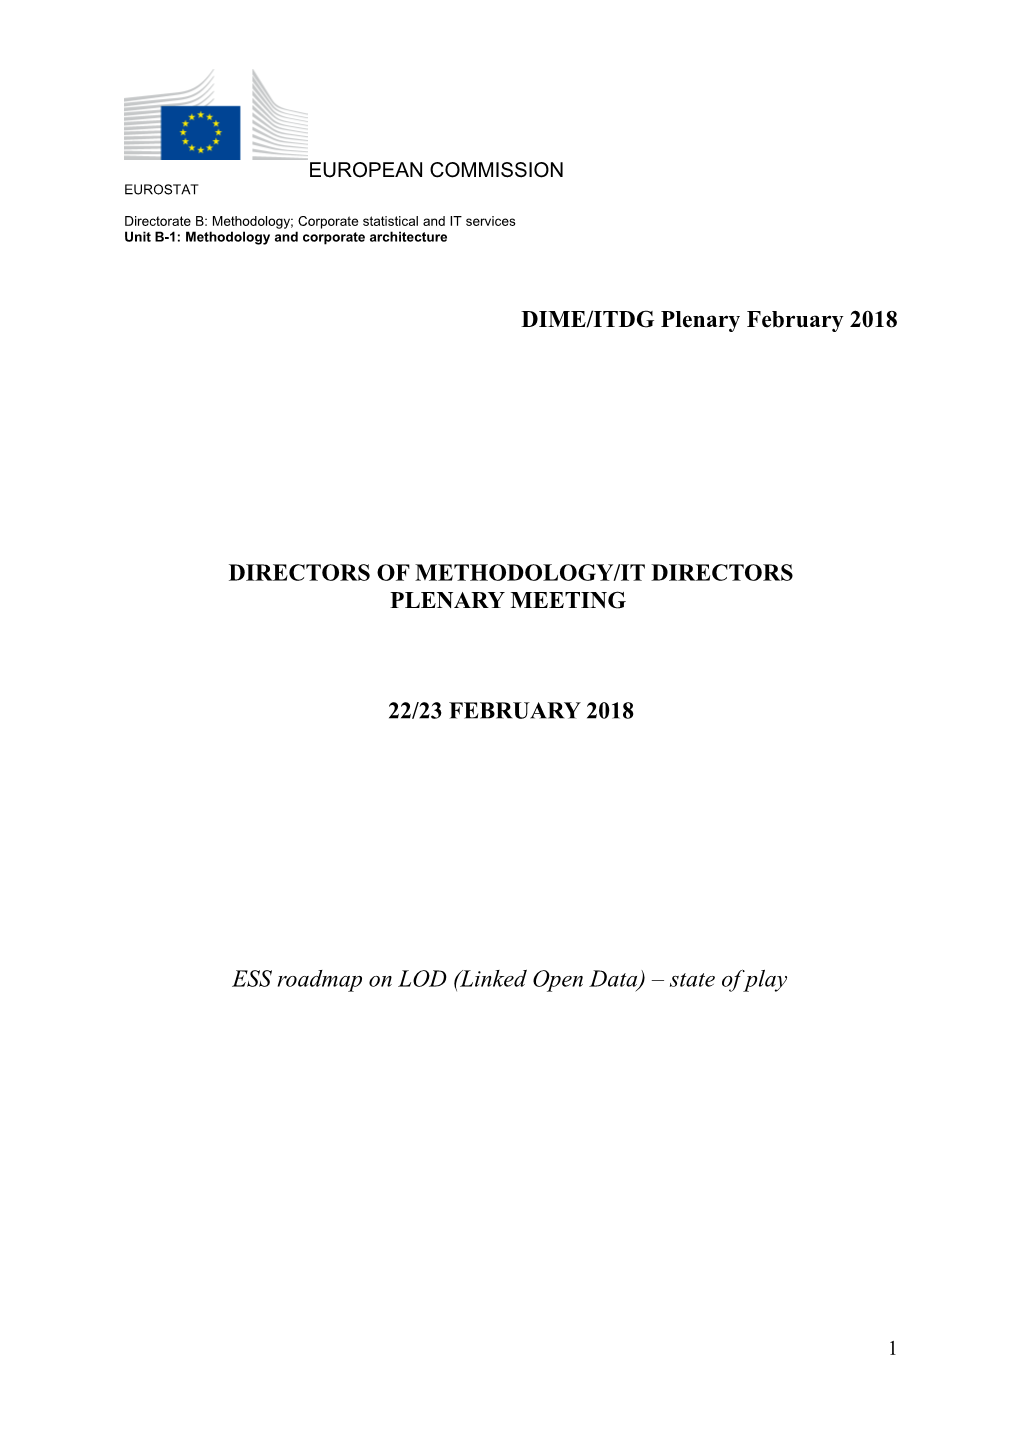 DIME/ITDG Plenaryfebruary 2018